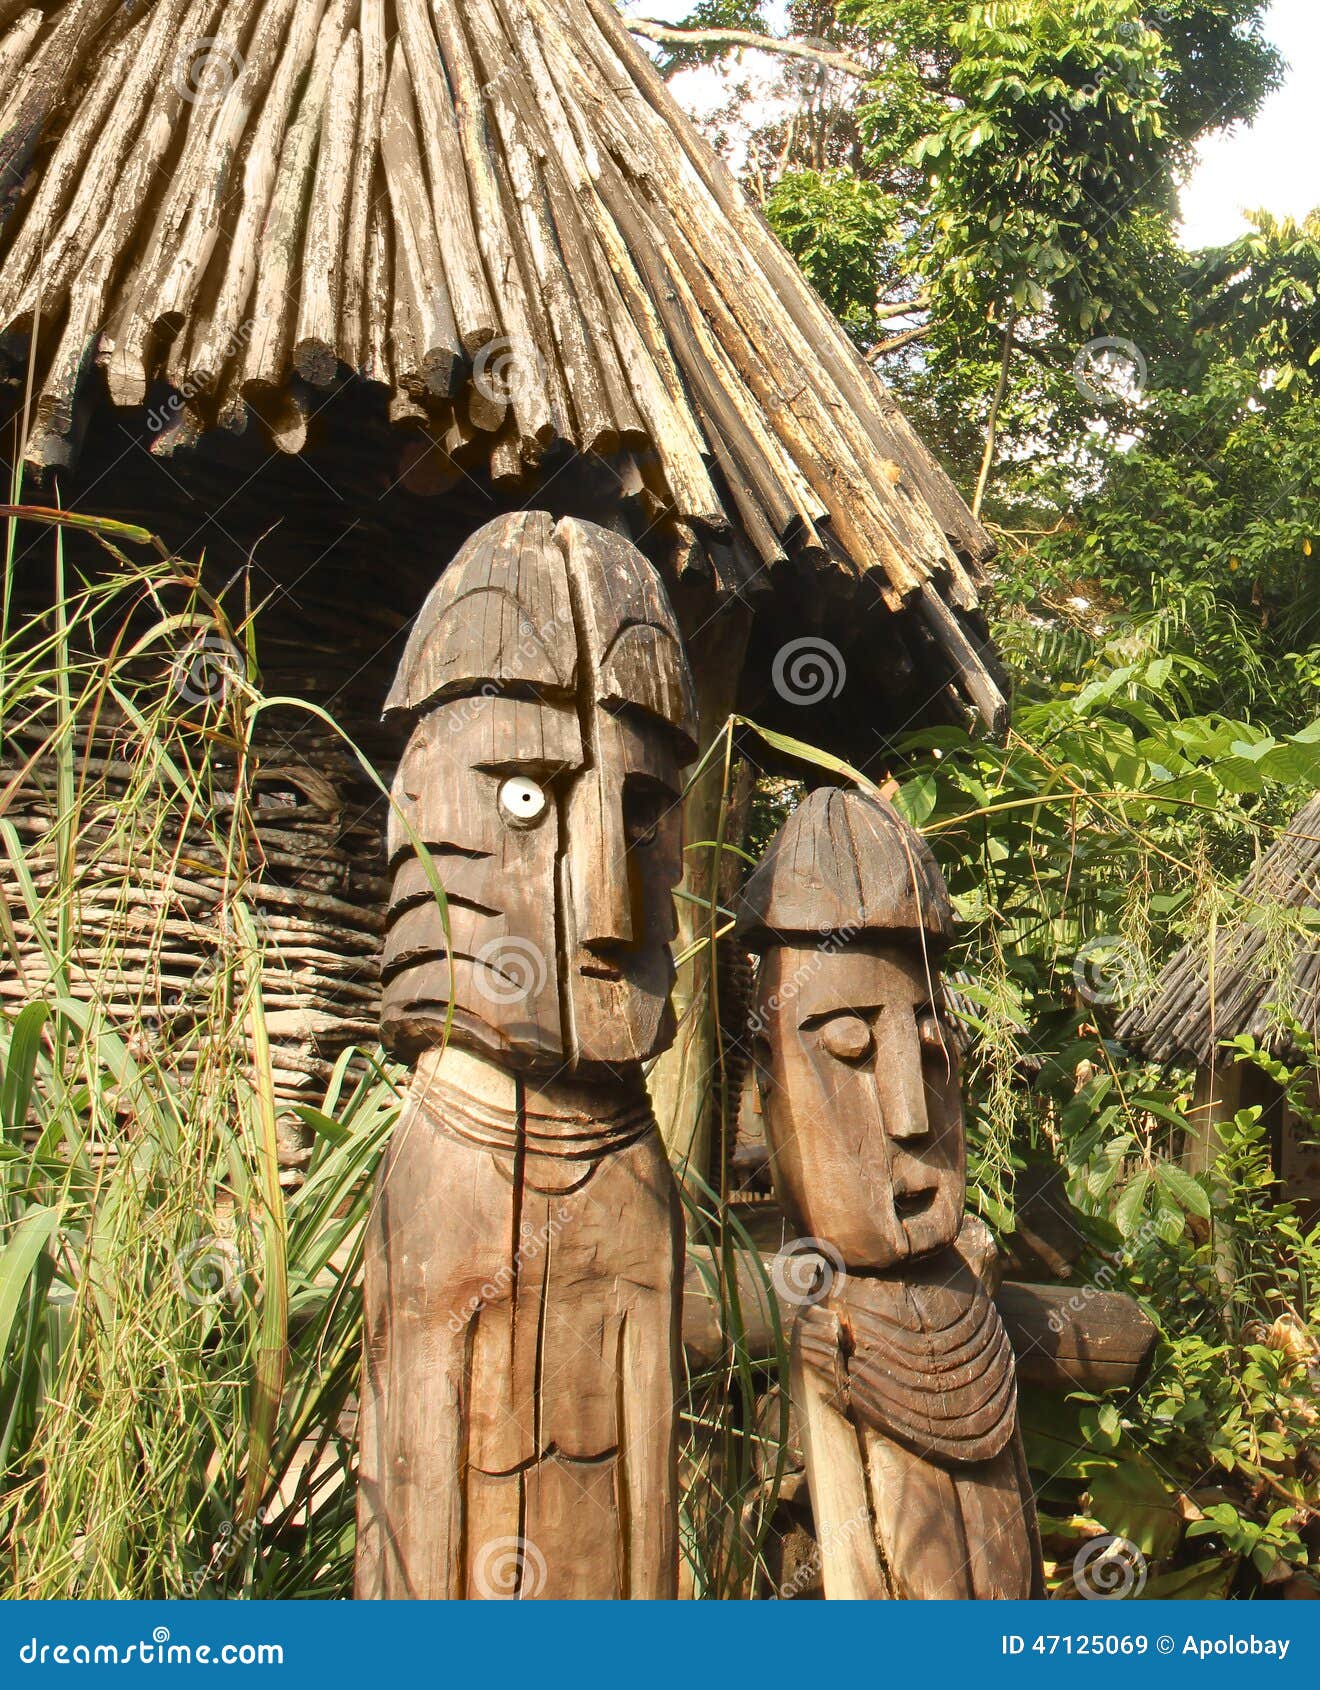 wooden-statues-aboriginal-statue-s-47125